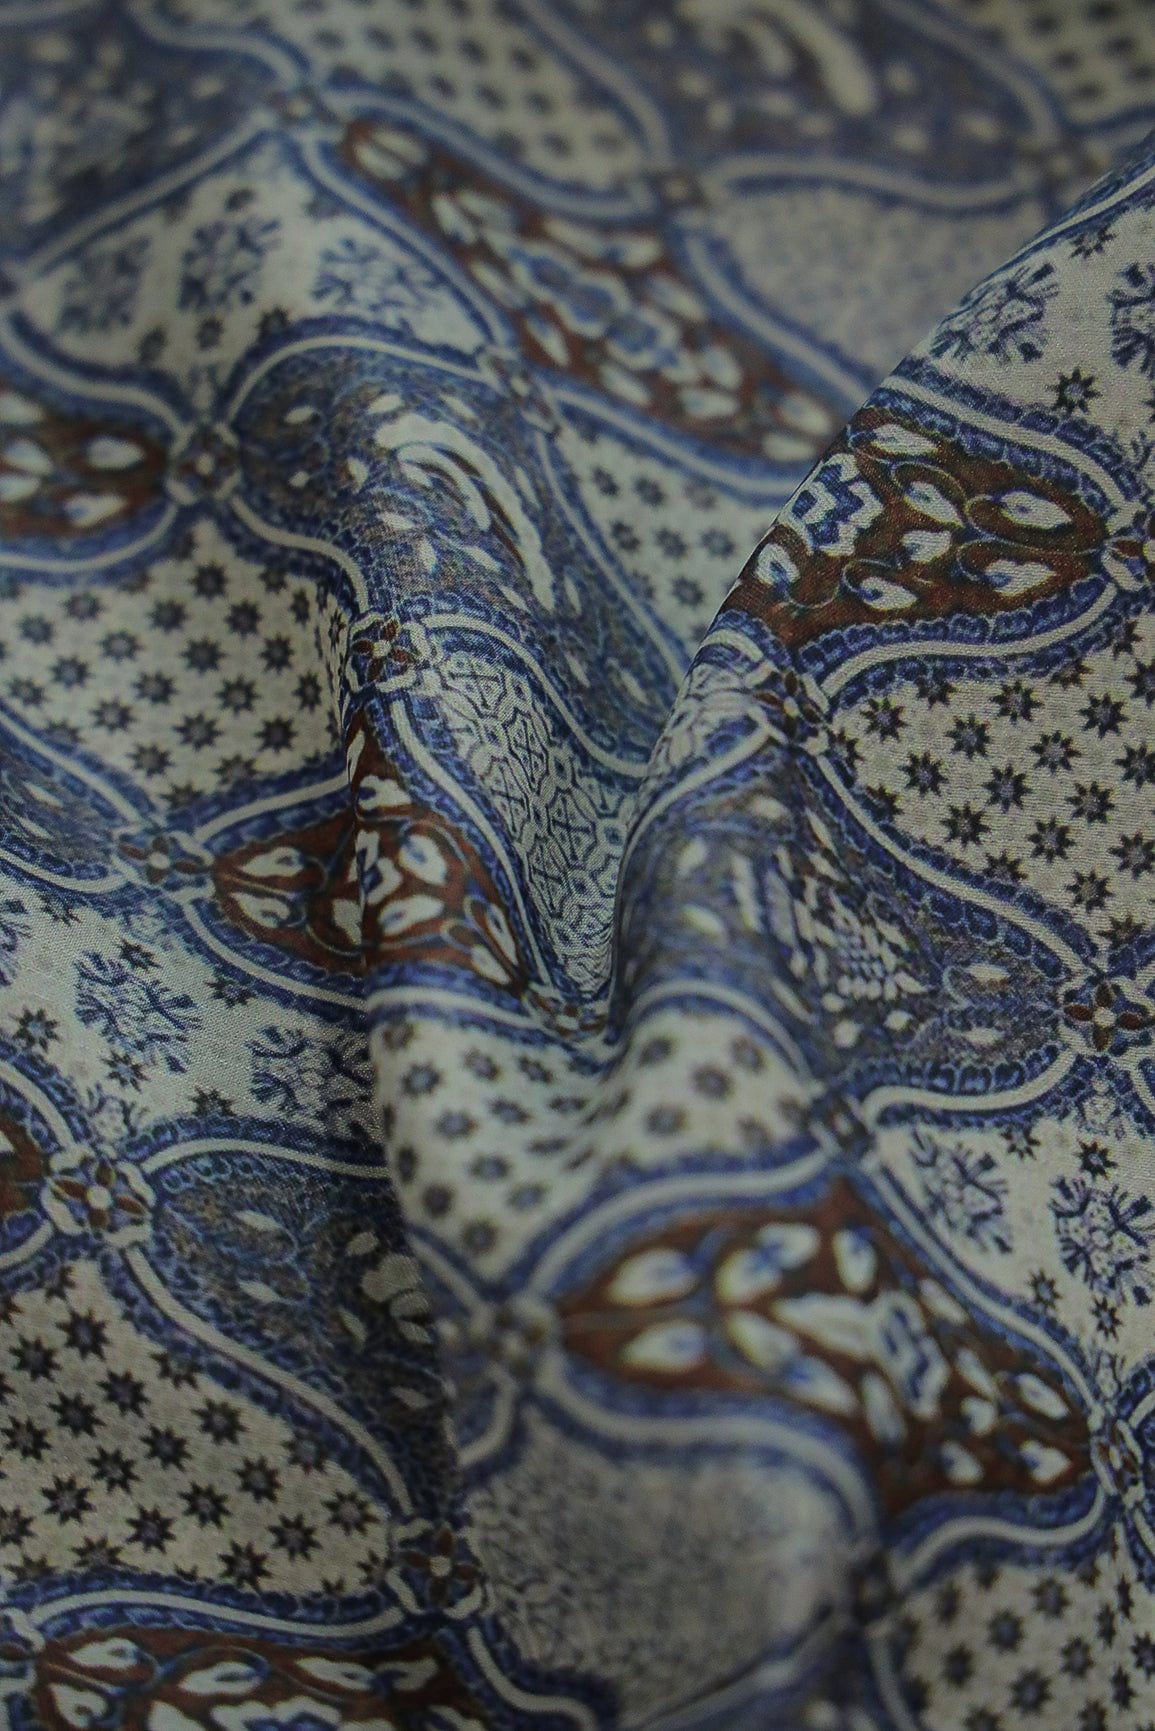 doeraa Prints Blue Cultural Digital Print on Tussar Satin Fabric